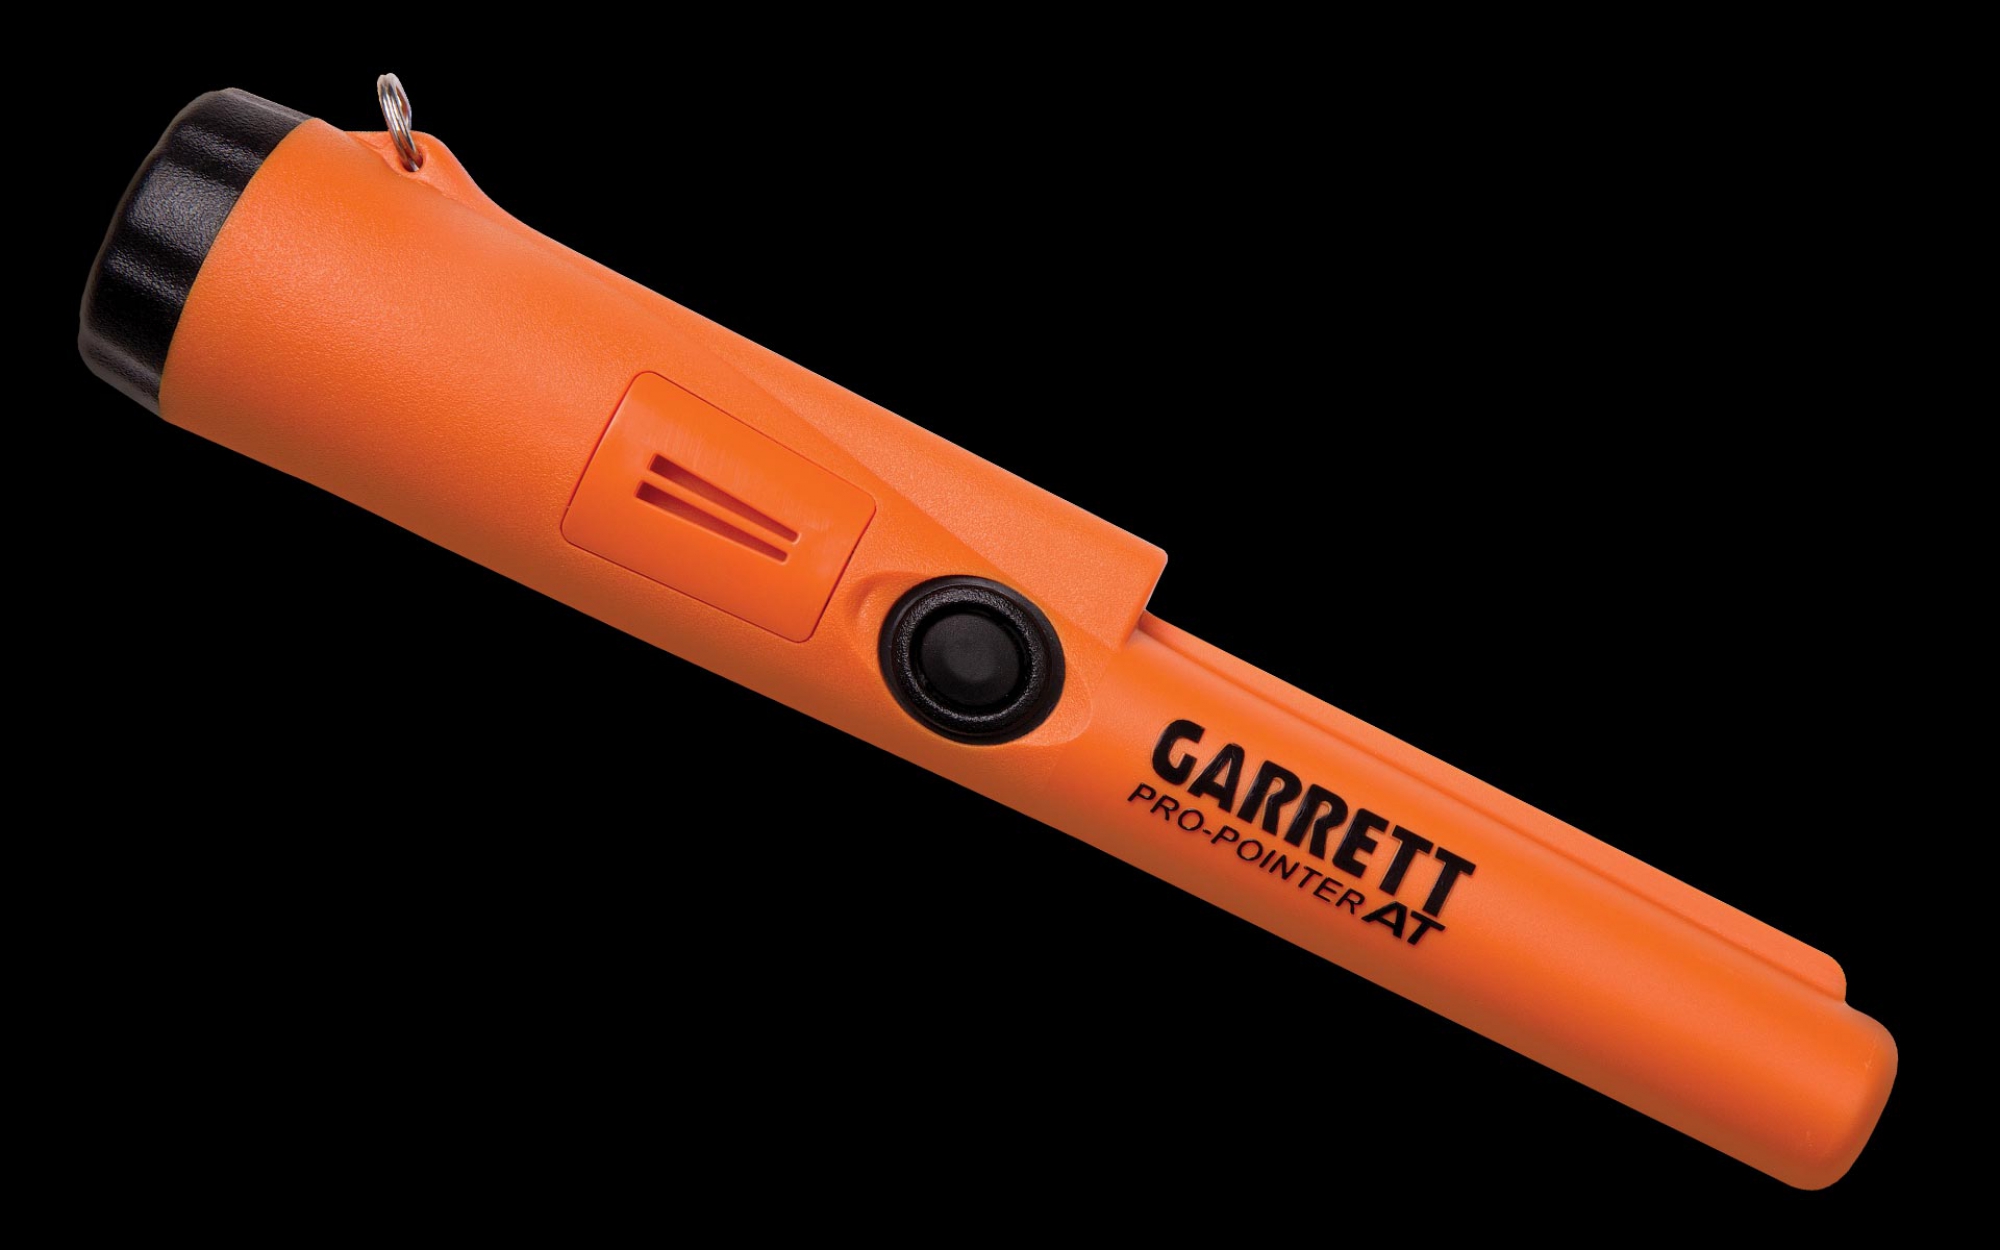 Garrett PRO-POINTER Metal Detector 1140900